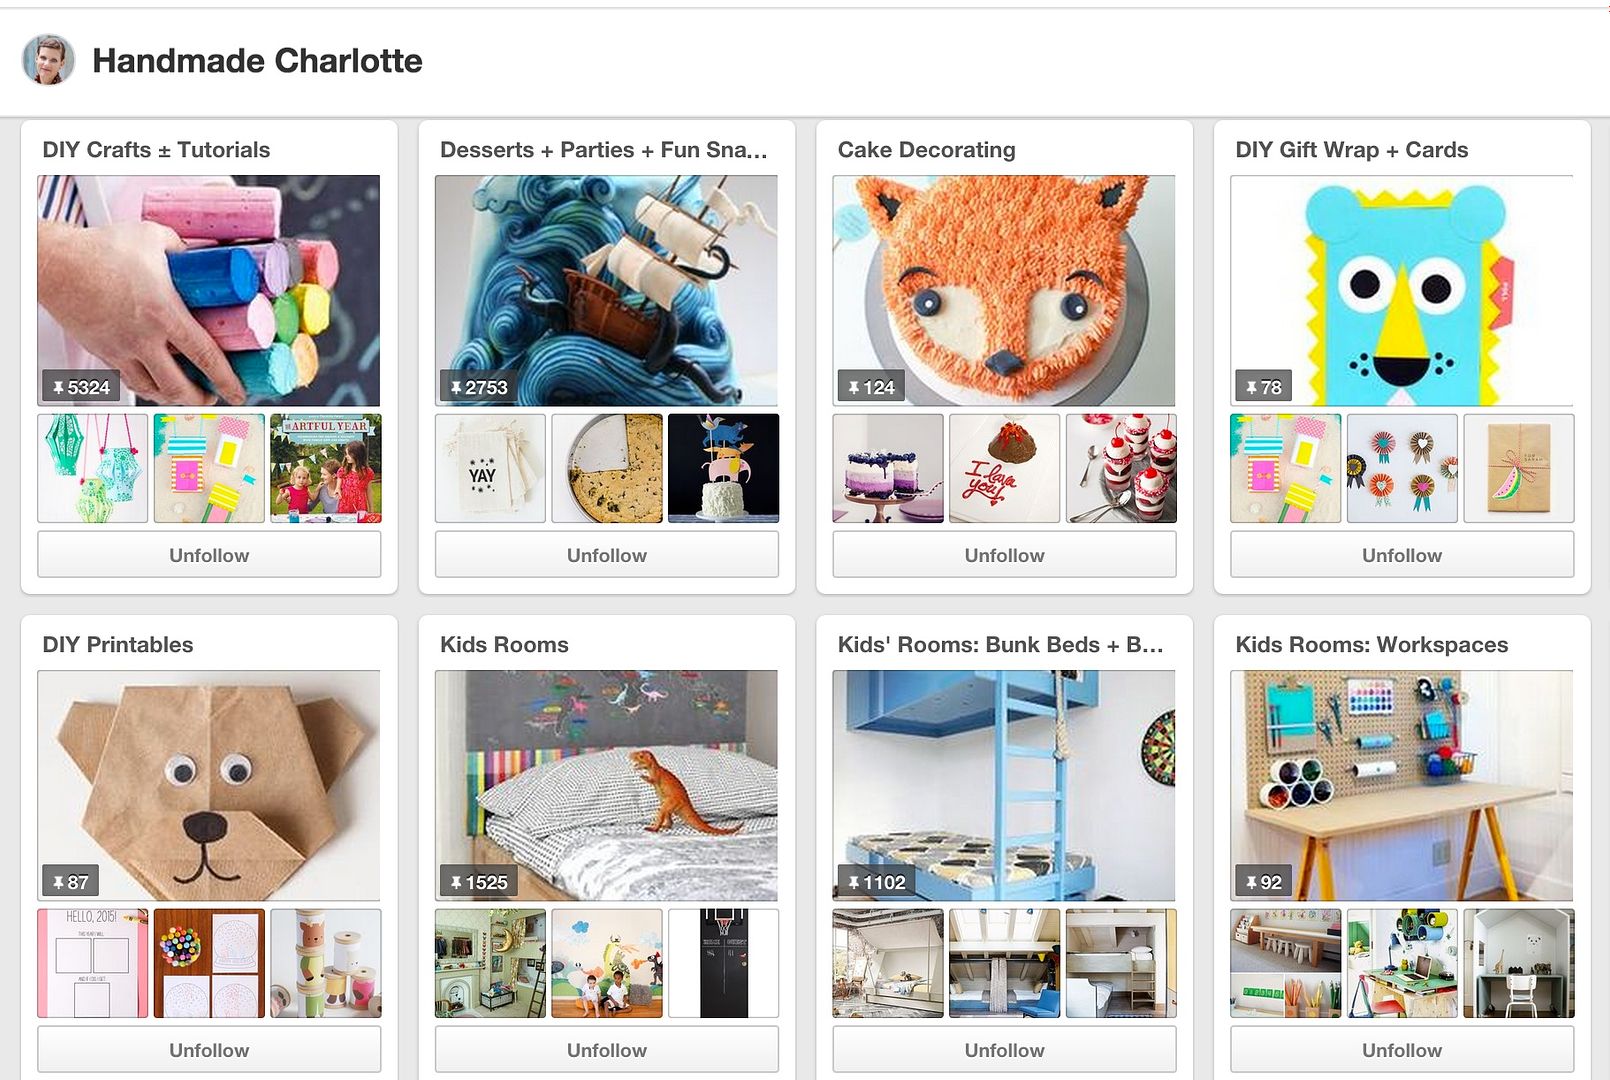 Handmade Charlotte on Pinterest | Great curation